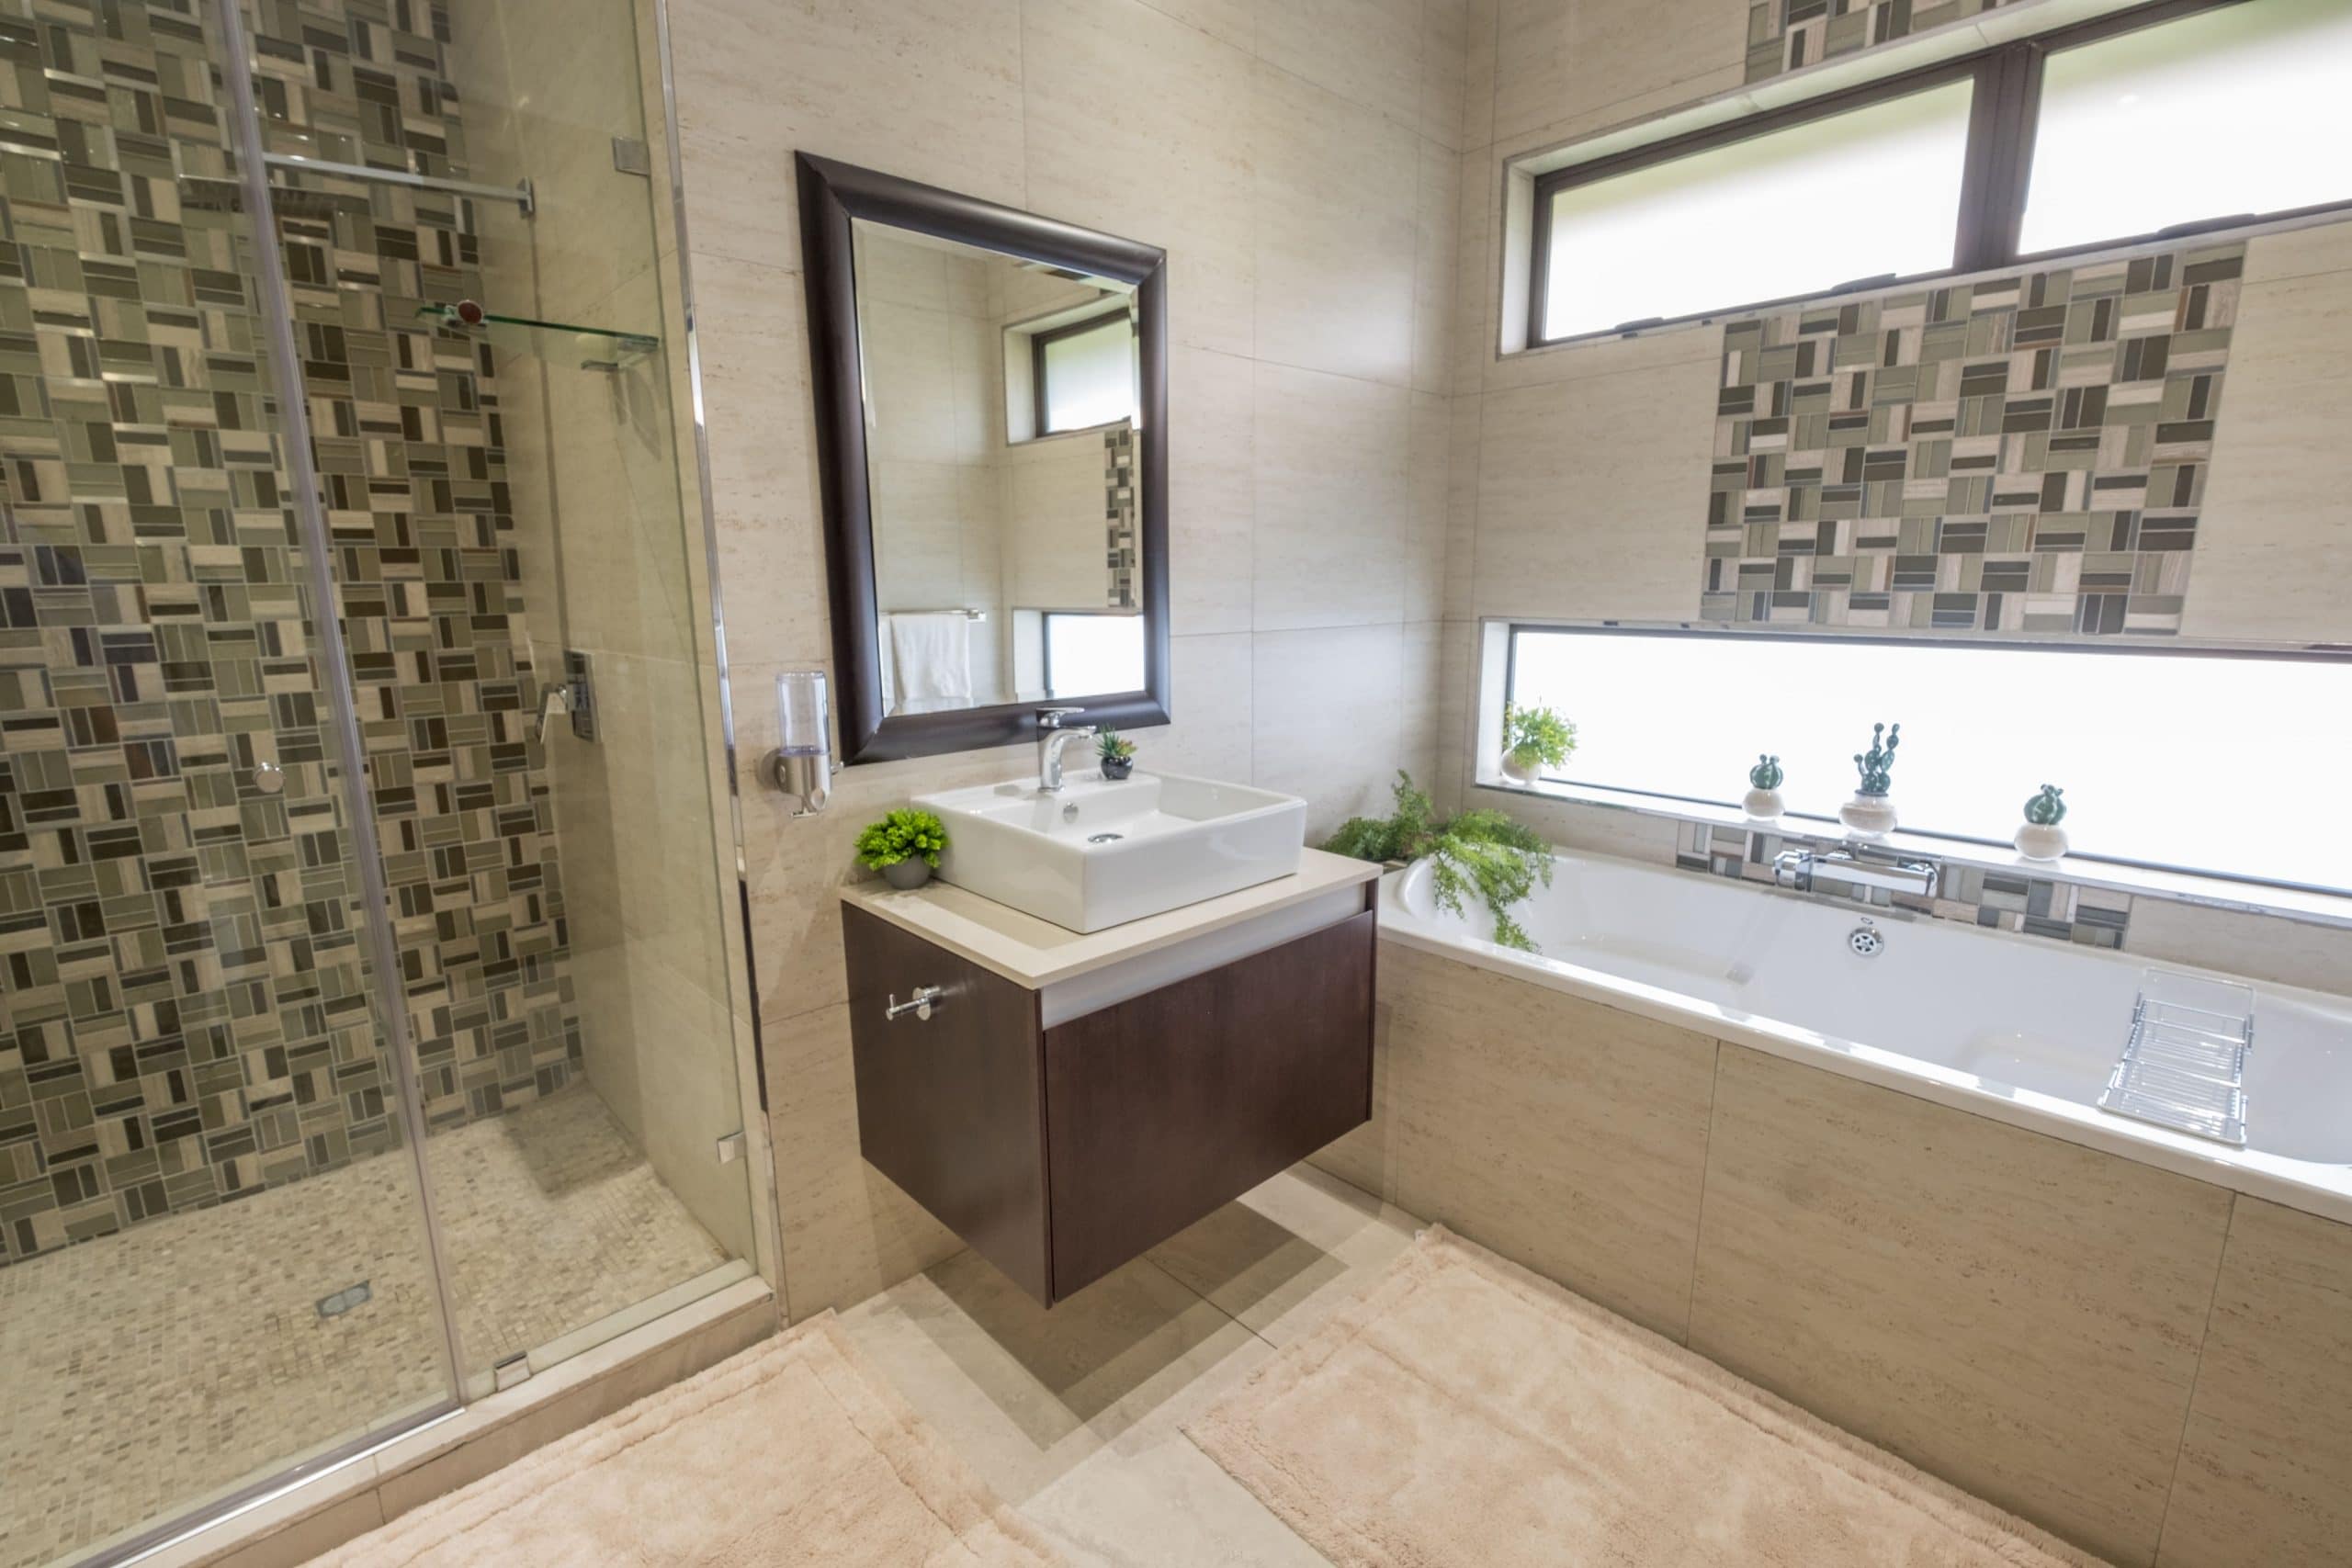 Minimalistic earth-toned bathroom bathed in soft light